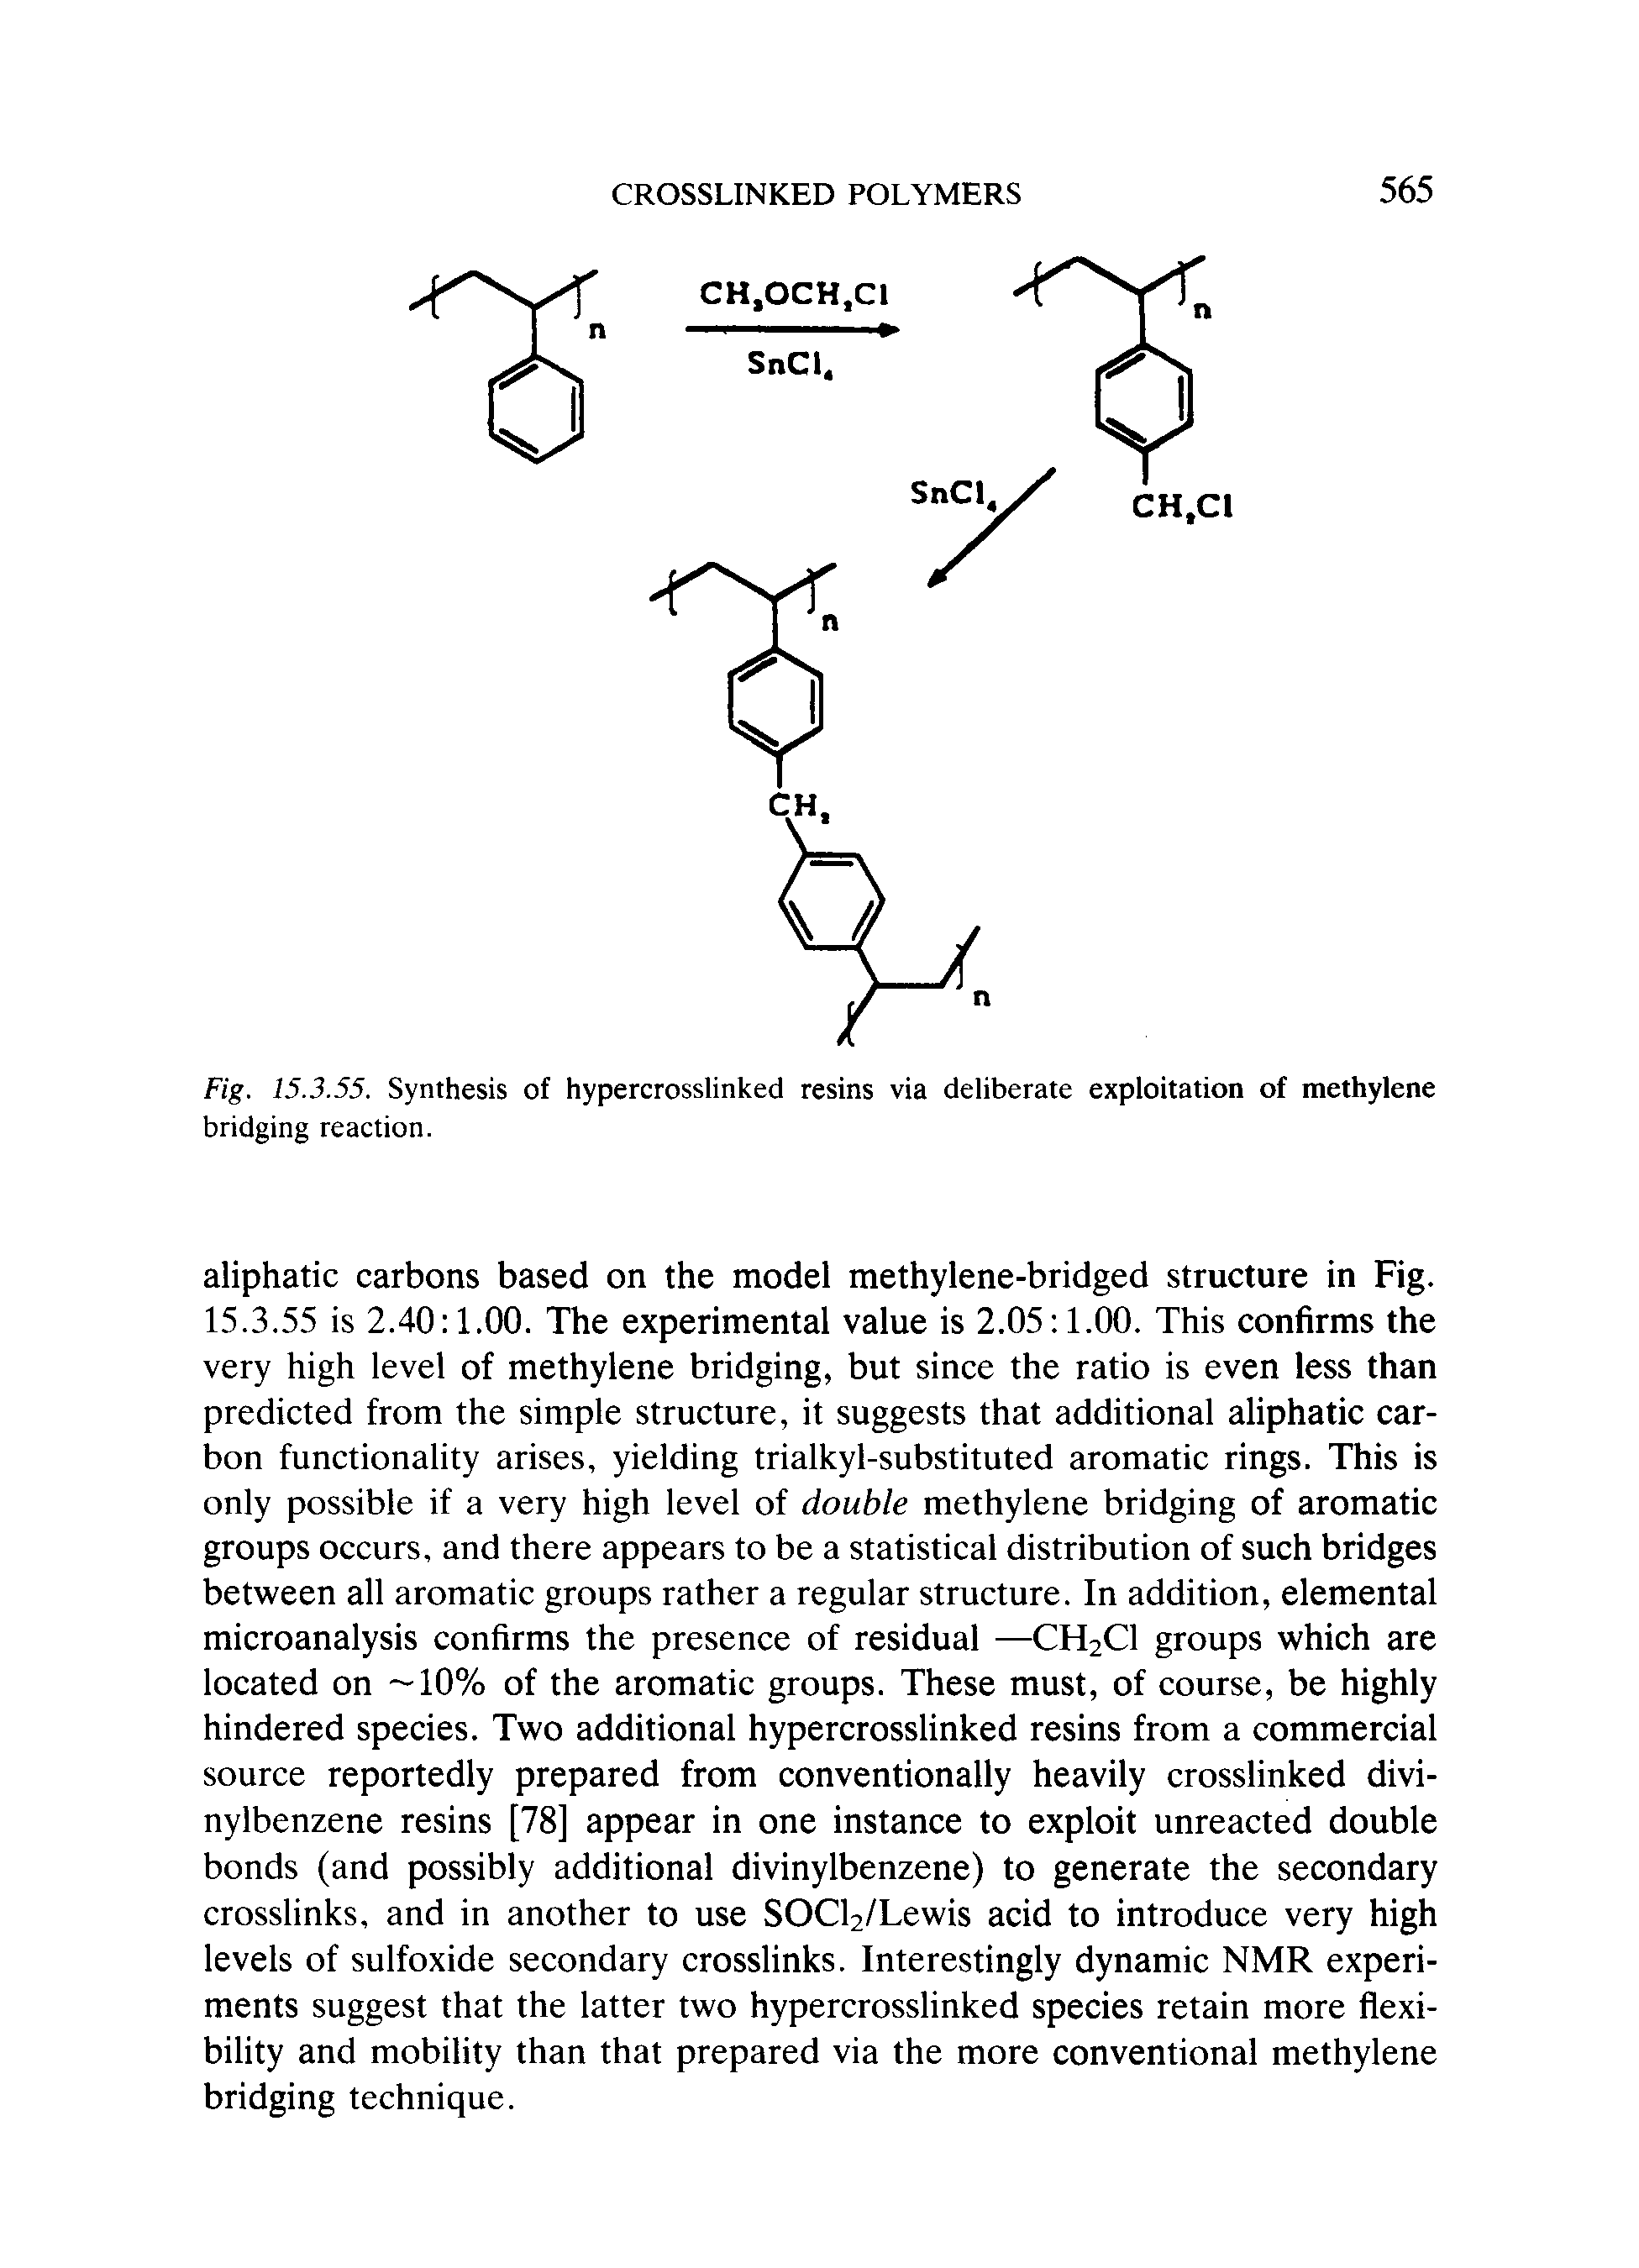 Fig. 15.3.55. Synthesis of hypercrosslinked resins via deliberate exploitation of methylene bridging reaction.